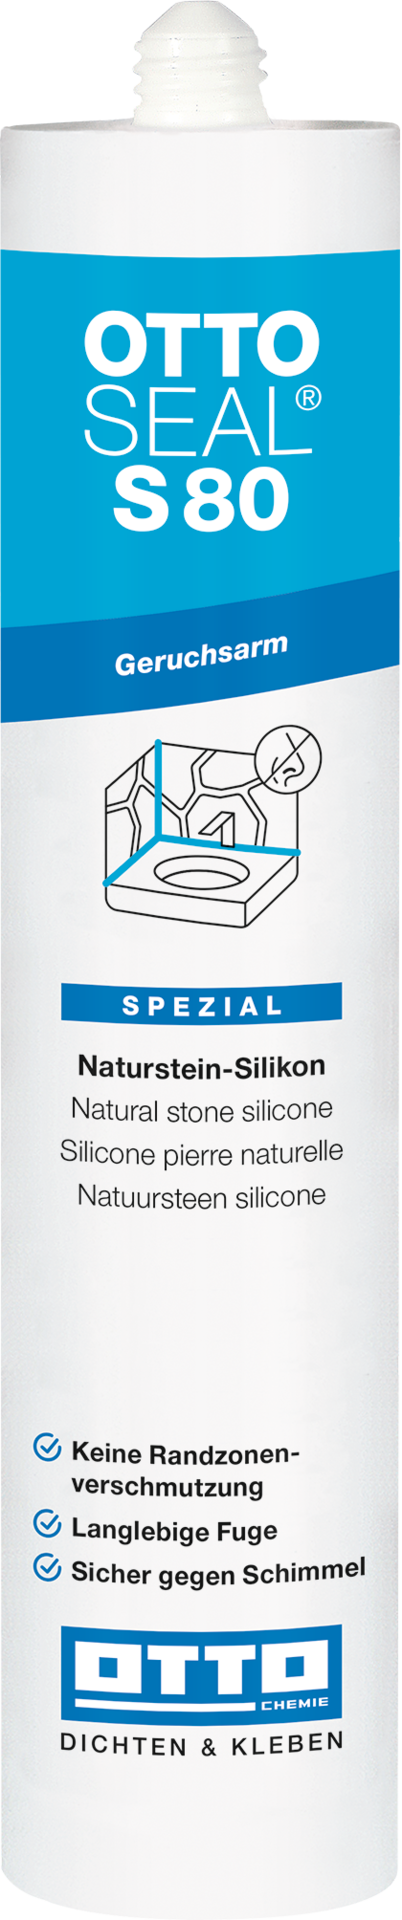 OTTOSEAL® S80 Das geruchsarme Naturstein-Silikon 310 ml